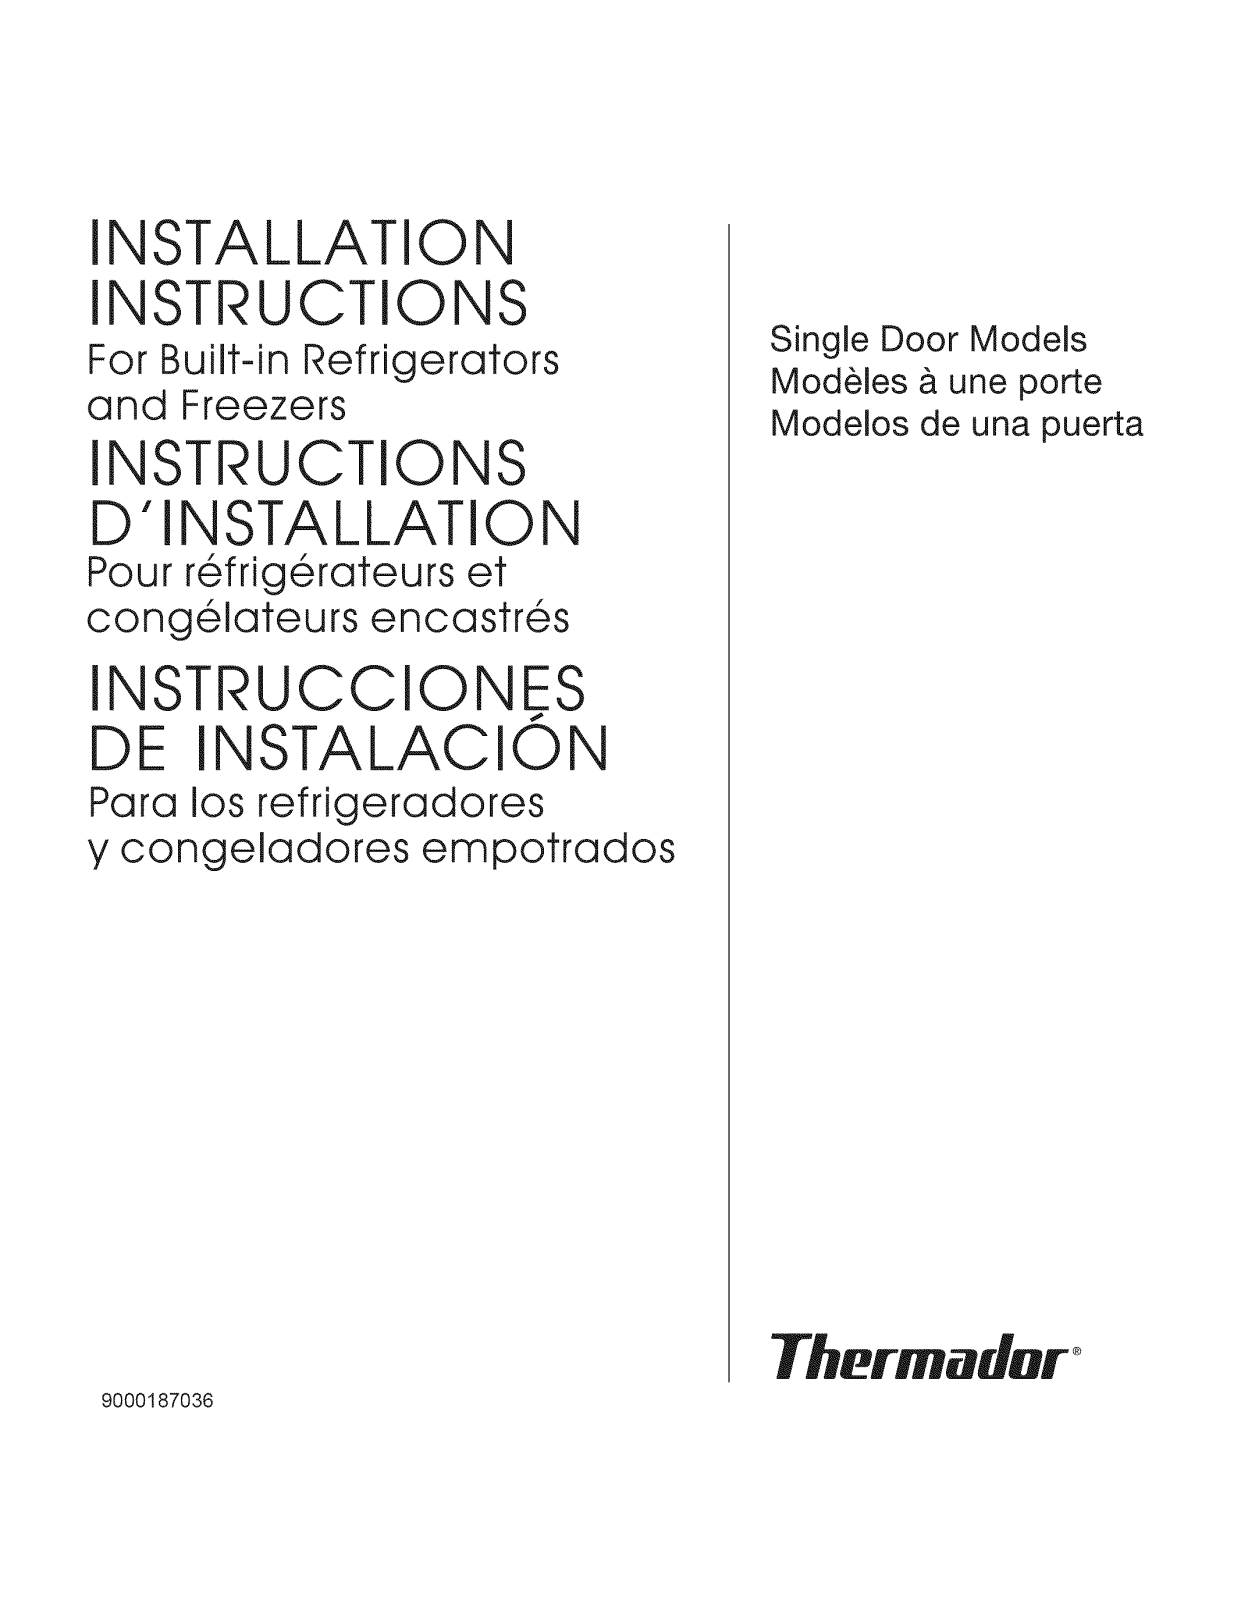 Thermador T30IR70NSP-05, T30IF70PSS-01, T30IR70CSS-01, T30IF70CSS-01, T24IR70PSS-01 Installation Guide